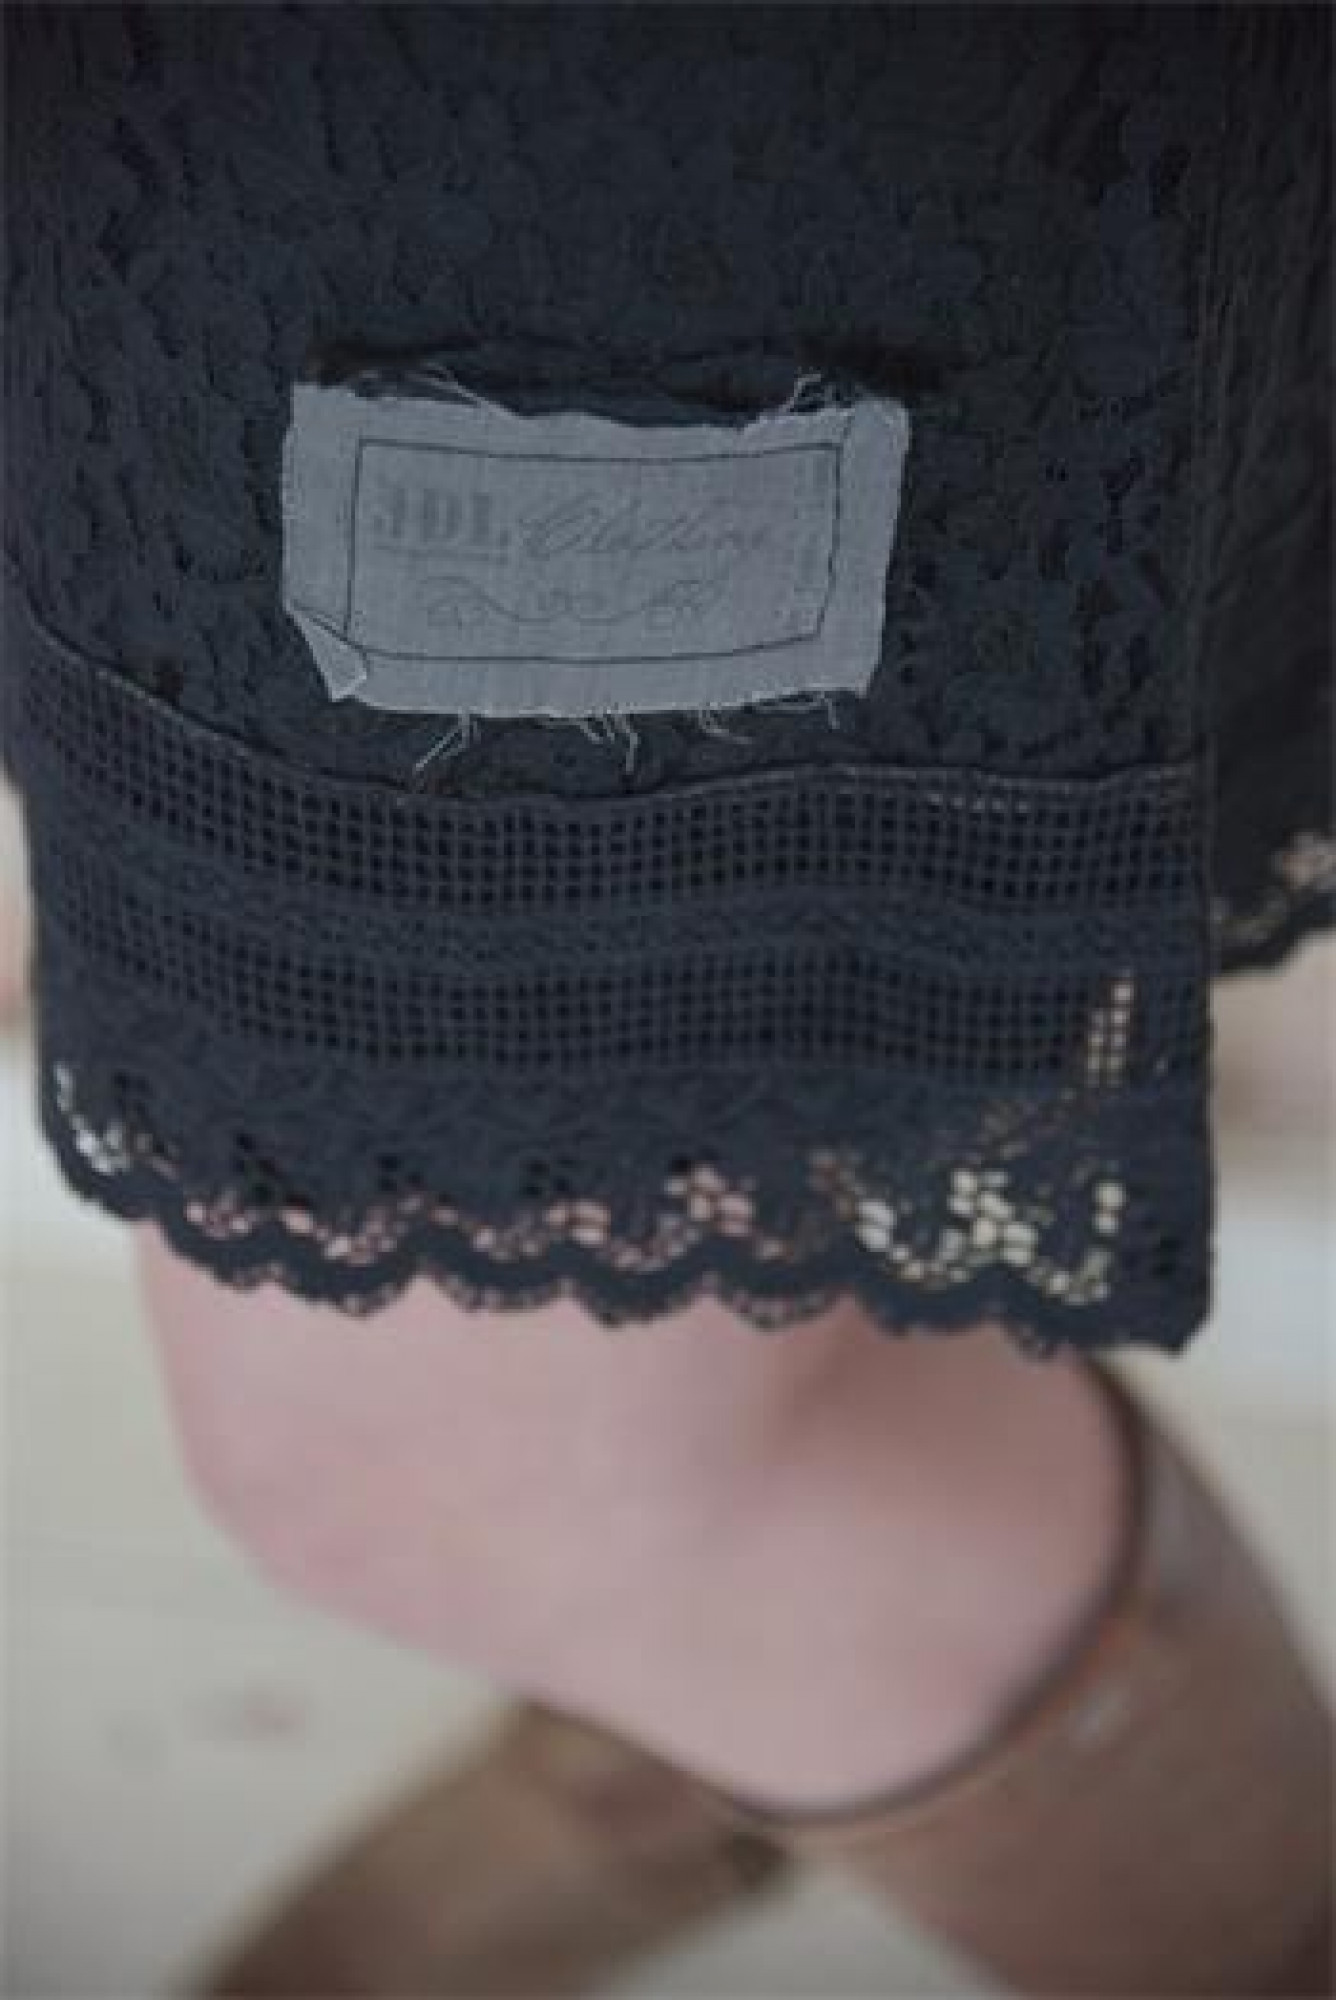 Kleid Vintage Baumwollspitze black